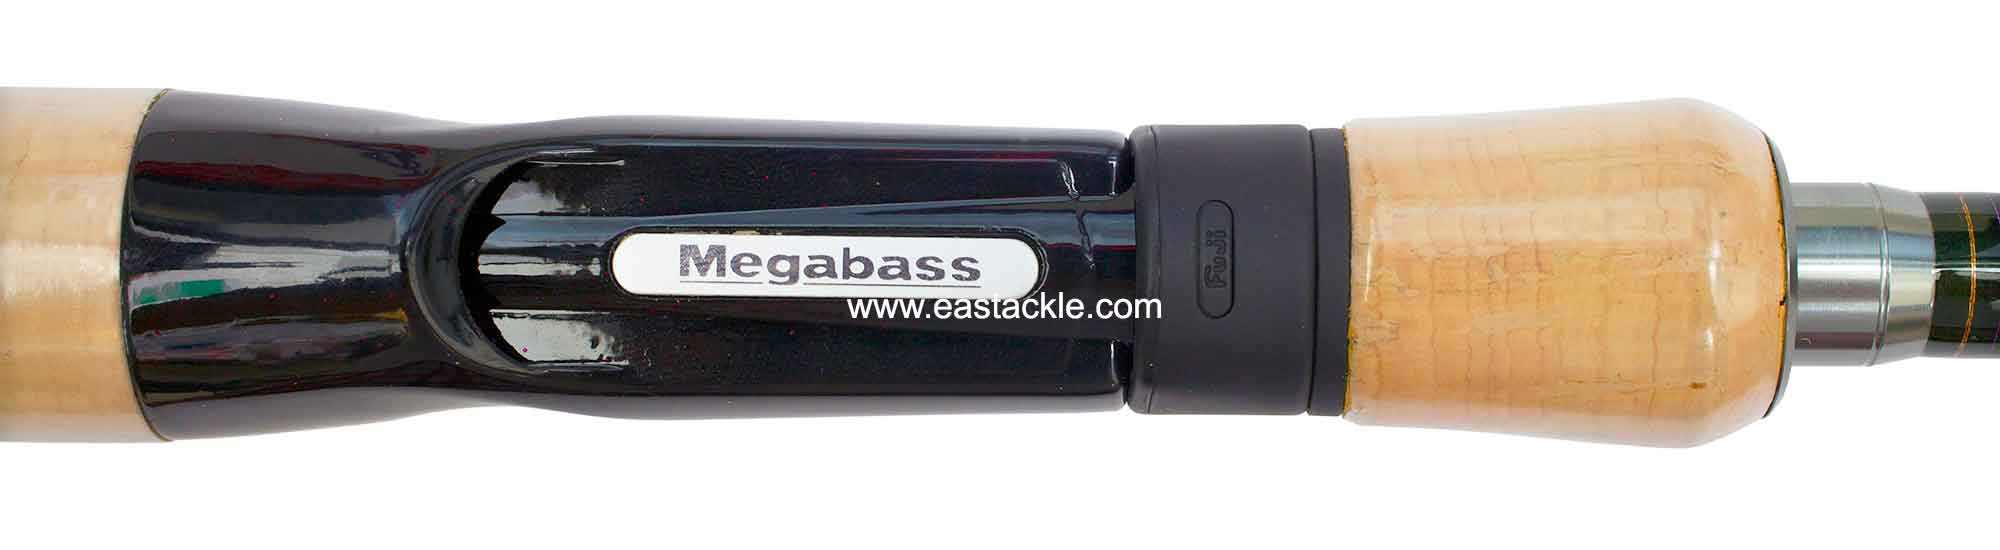 Megabass - Orochi XX - F6.1/2-70XX - JIG & WORM - Bait Casting Rod - Reel Seat (Top View)